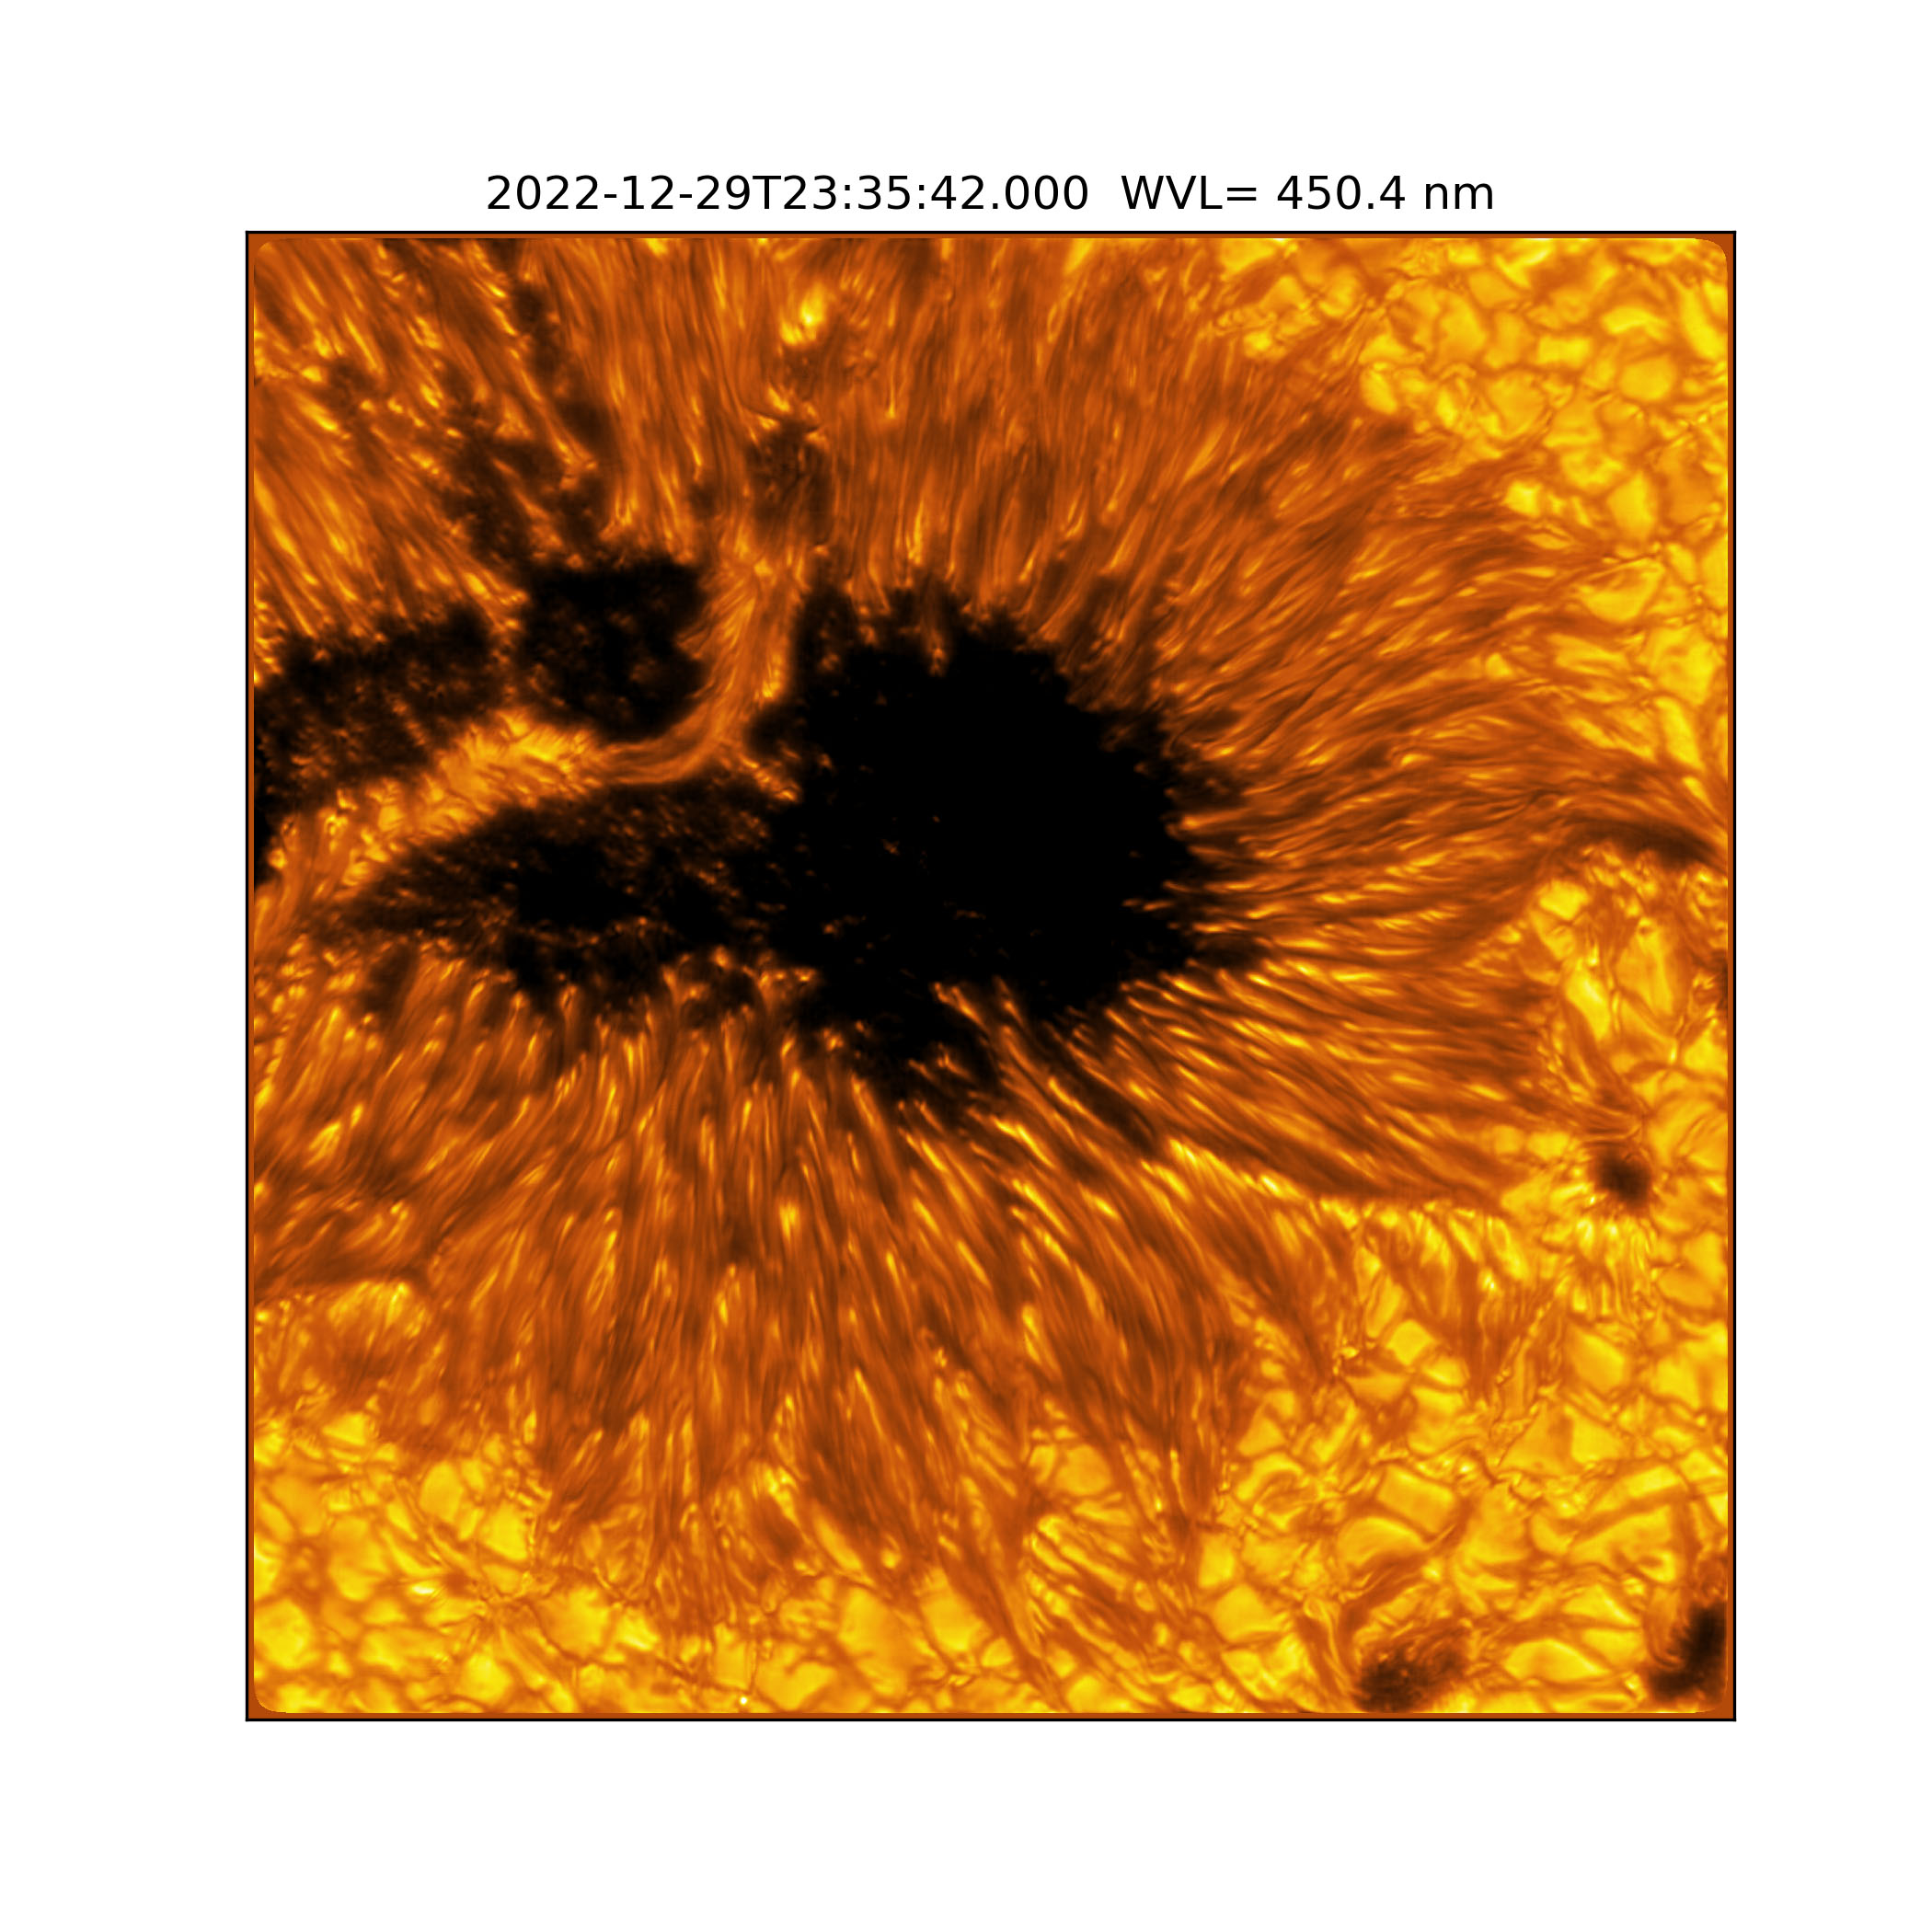 sol nuevas imagenes telescopio inouye atst ics vbiblue dc  vcc xfer 107796 391848 1 compressed8